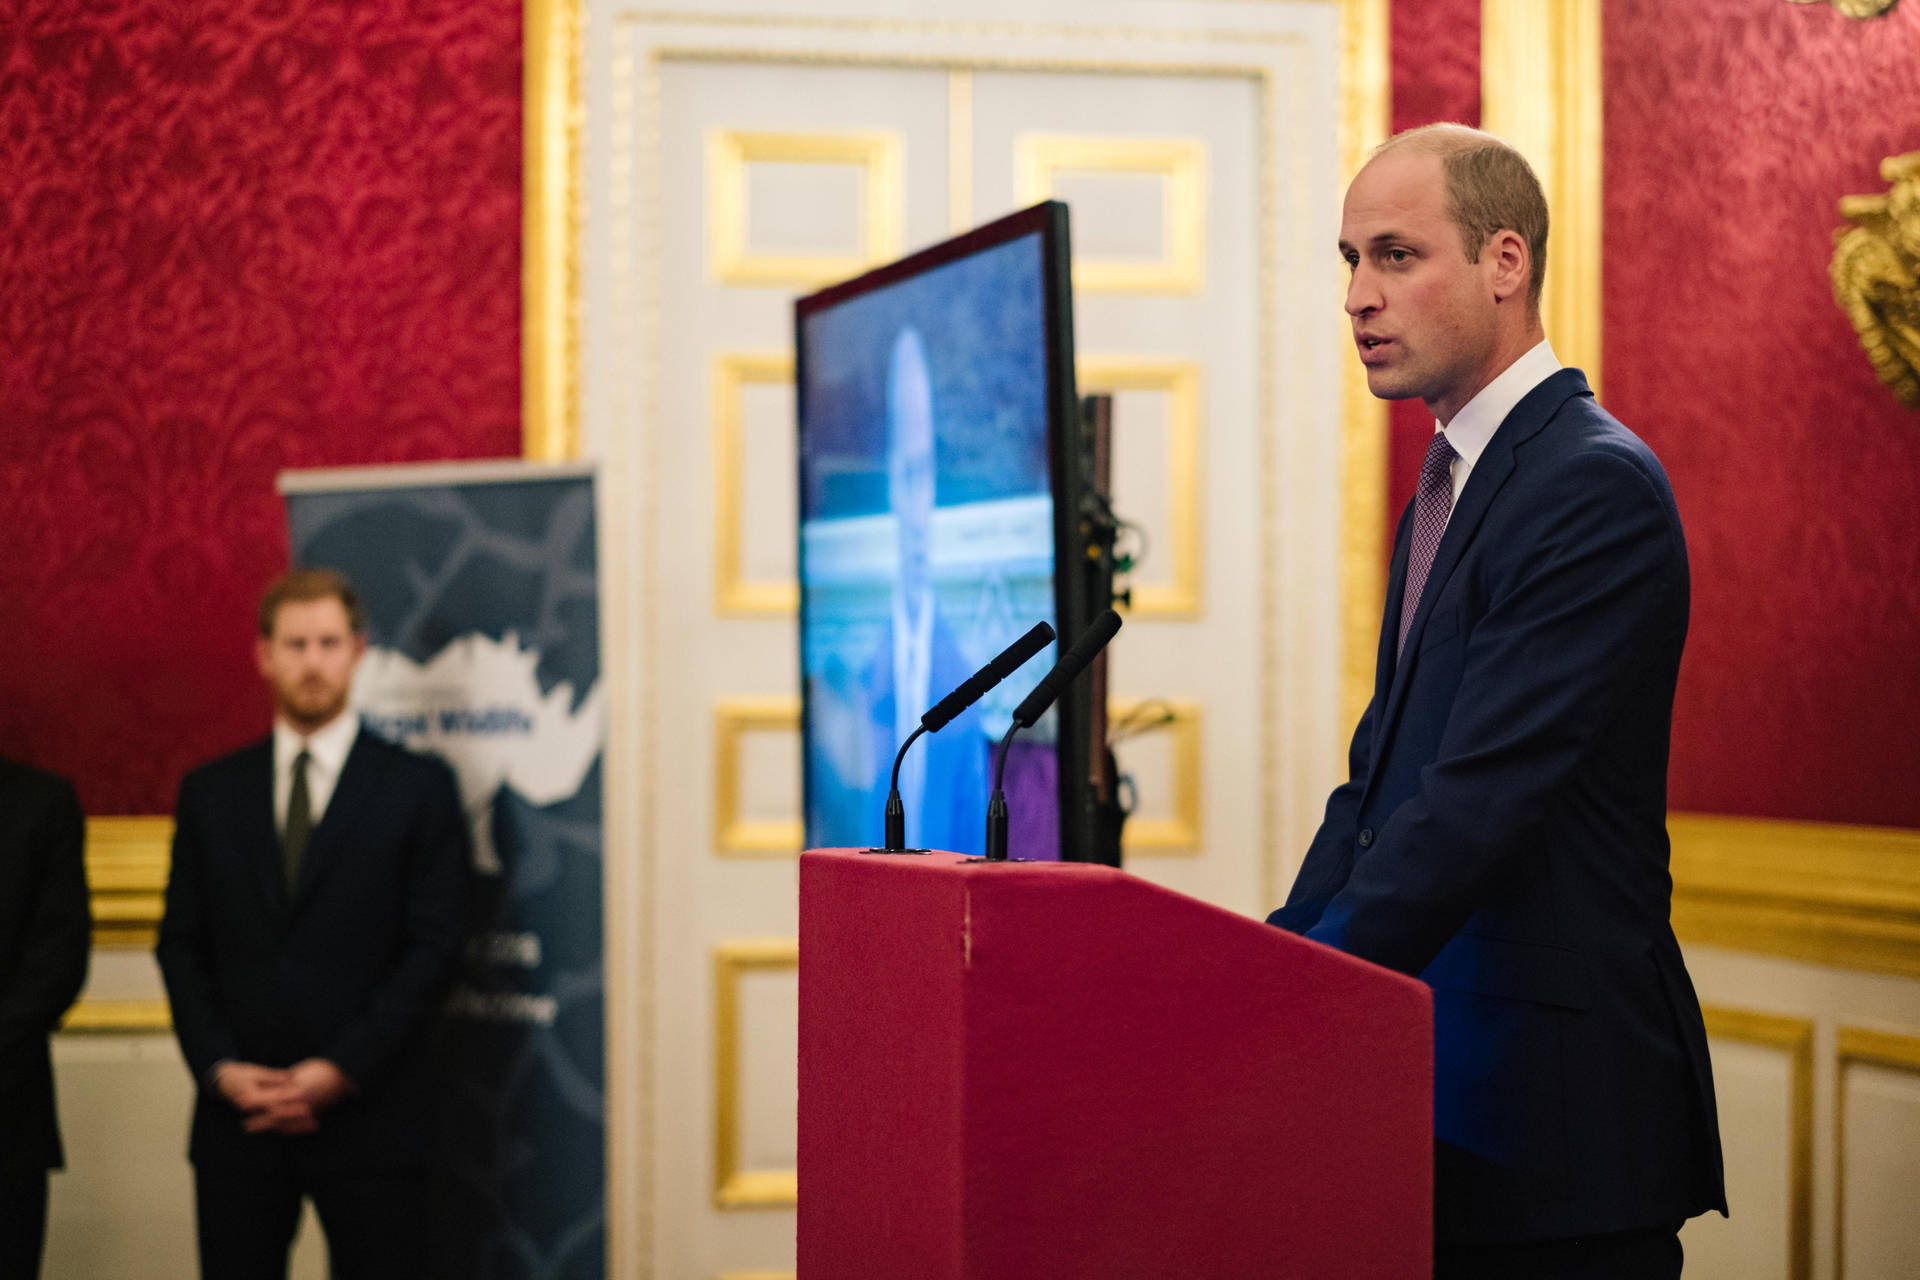 Prince William Speaking At The Podium Wallpaper